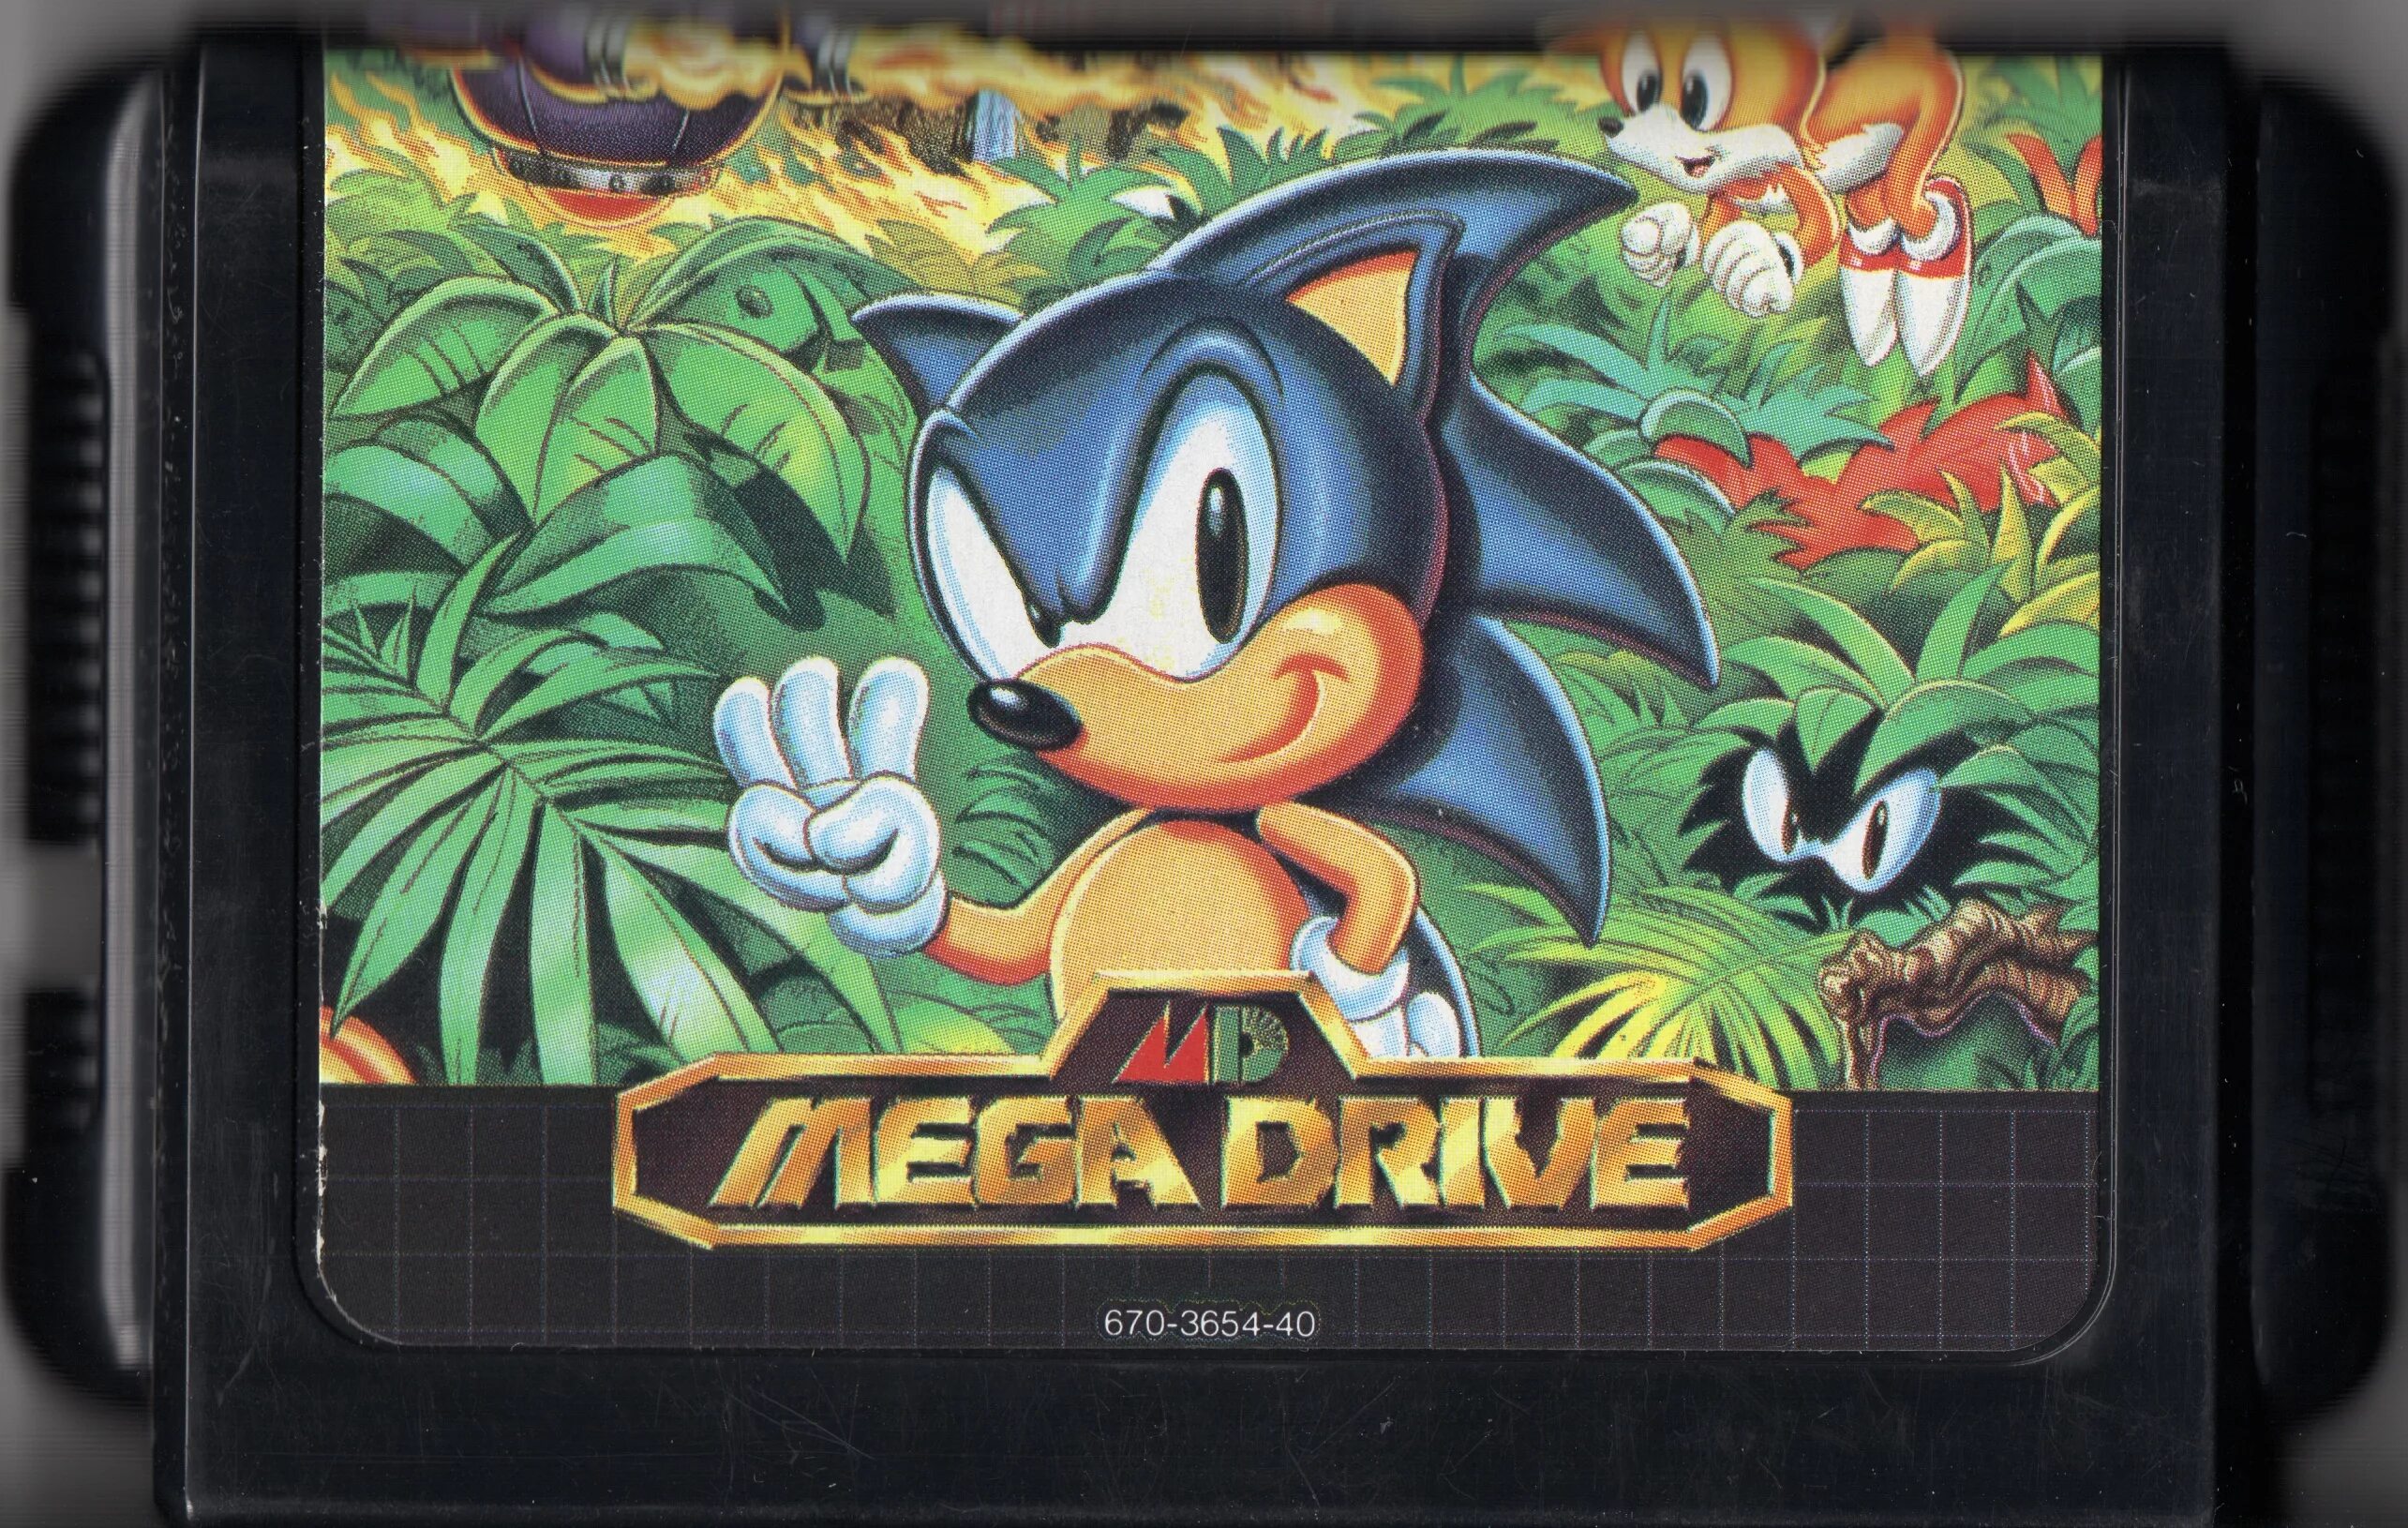 Sega Mega Drive картриджи Sonic. Sega Mega Drive Cartridge Sonic 1. Sega Mega Drive 2 картриджи Sonic. Sonic 3 Sega Mega Drive. Sonic 3 extra slot